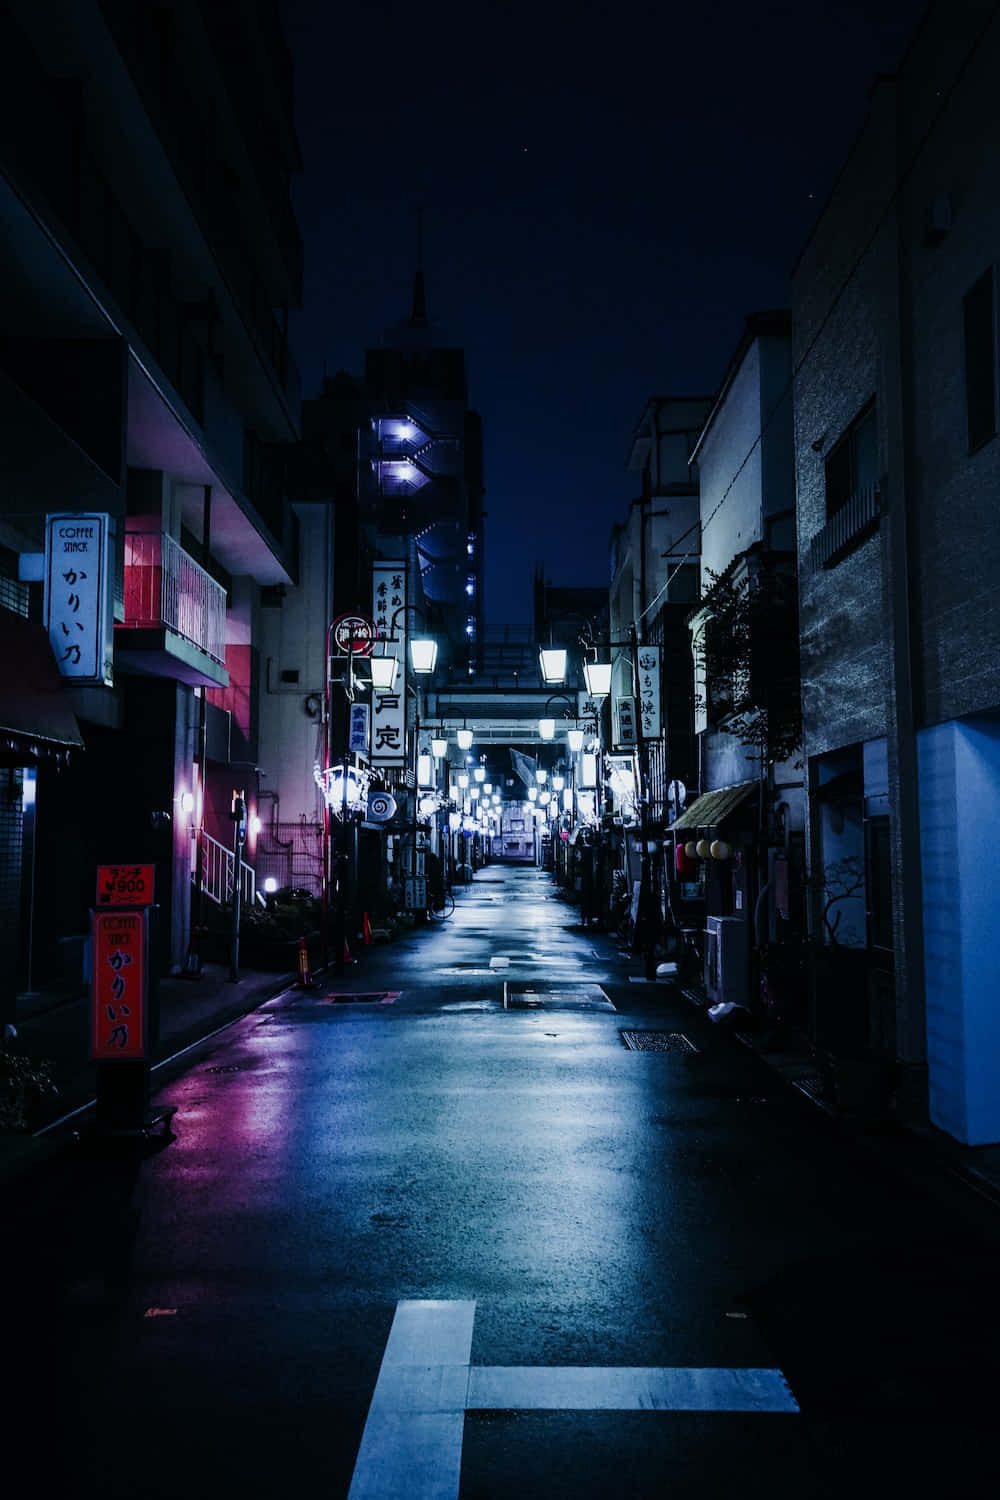 Taking a Quiet Walk Down the Street at Night